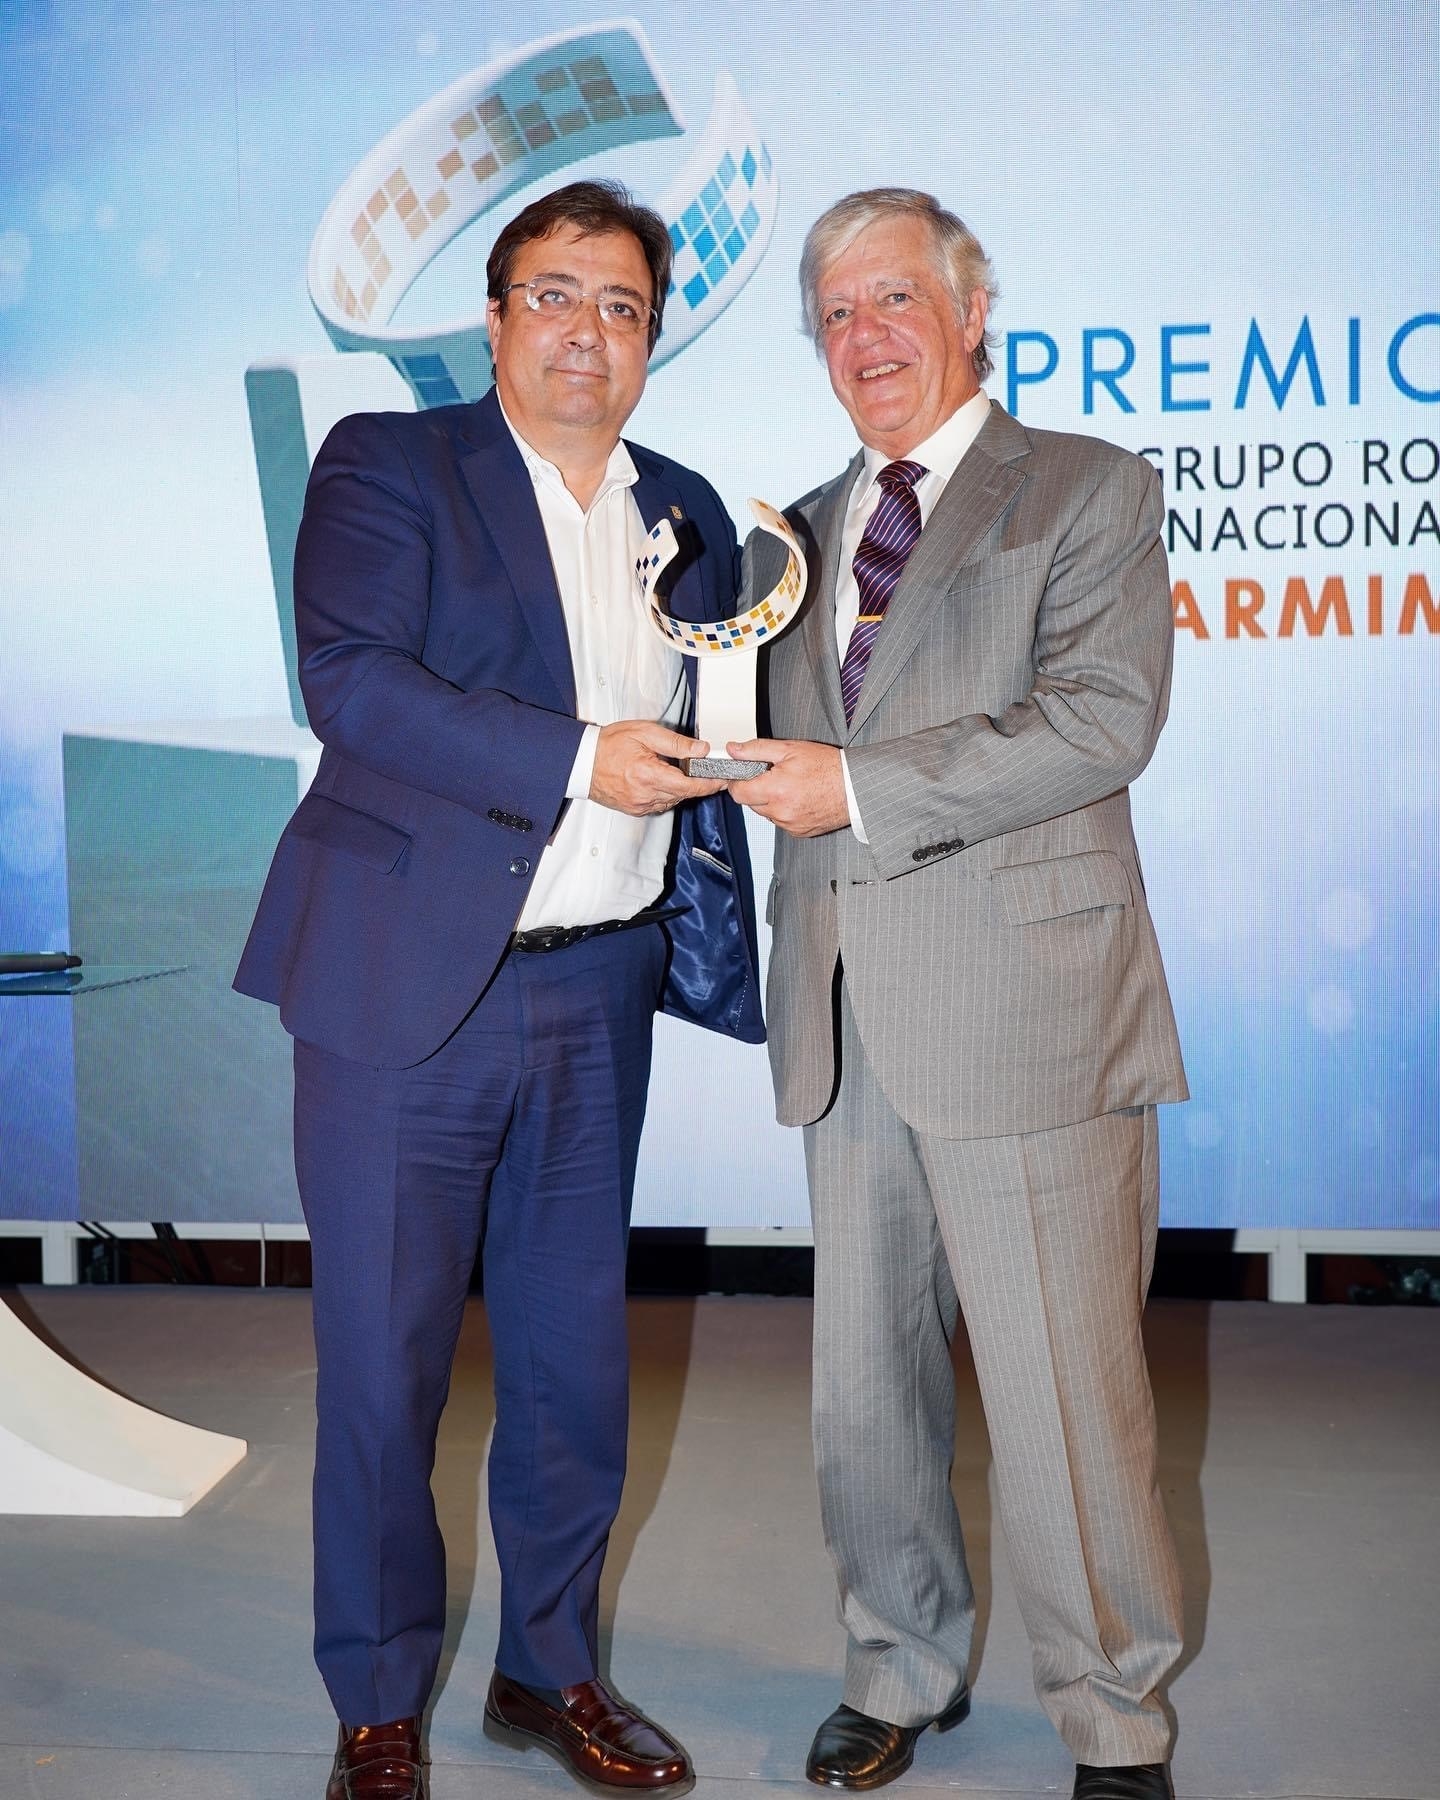 Carlos Vasconcelos received the ROS Group International Award